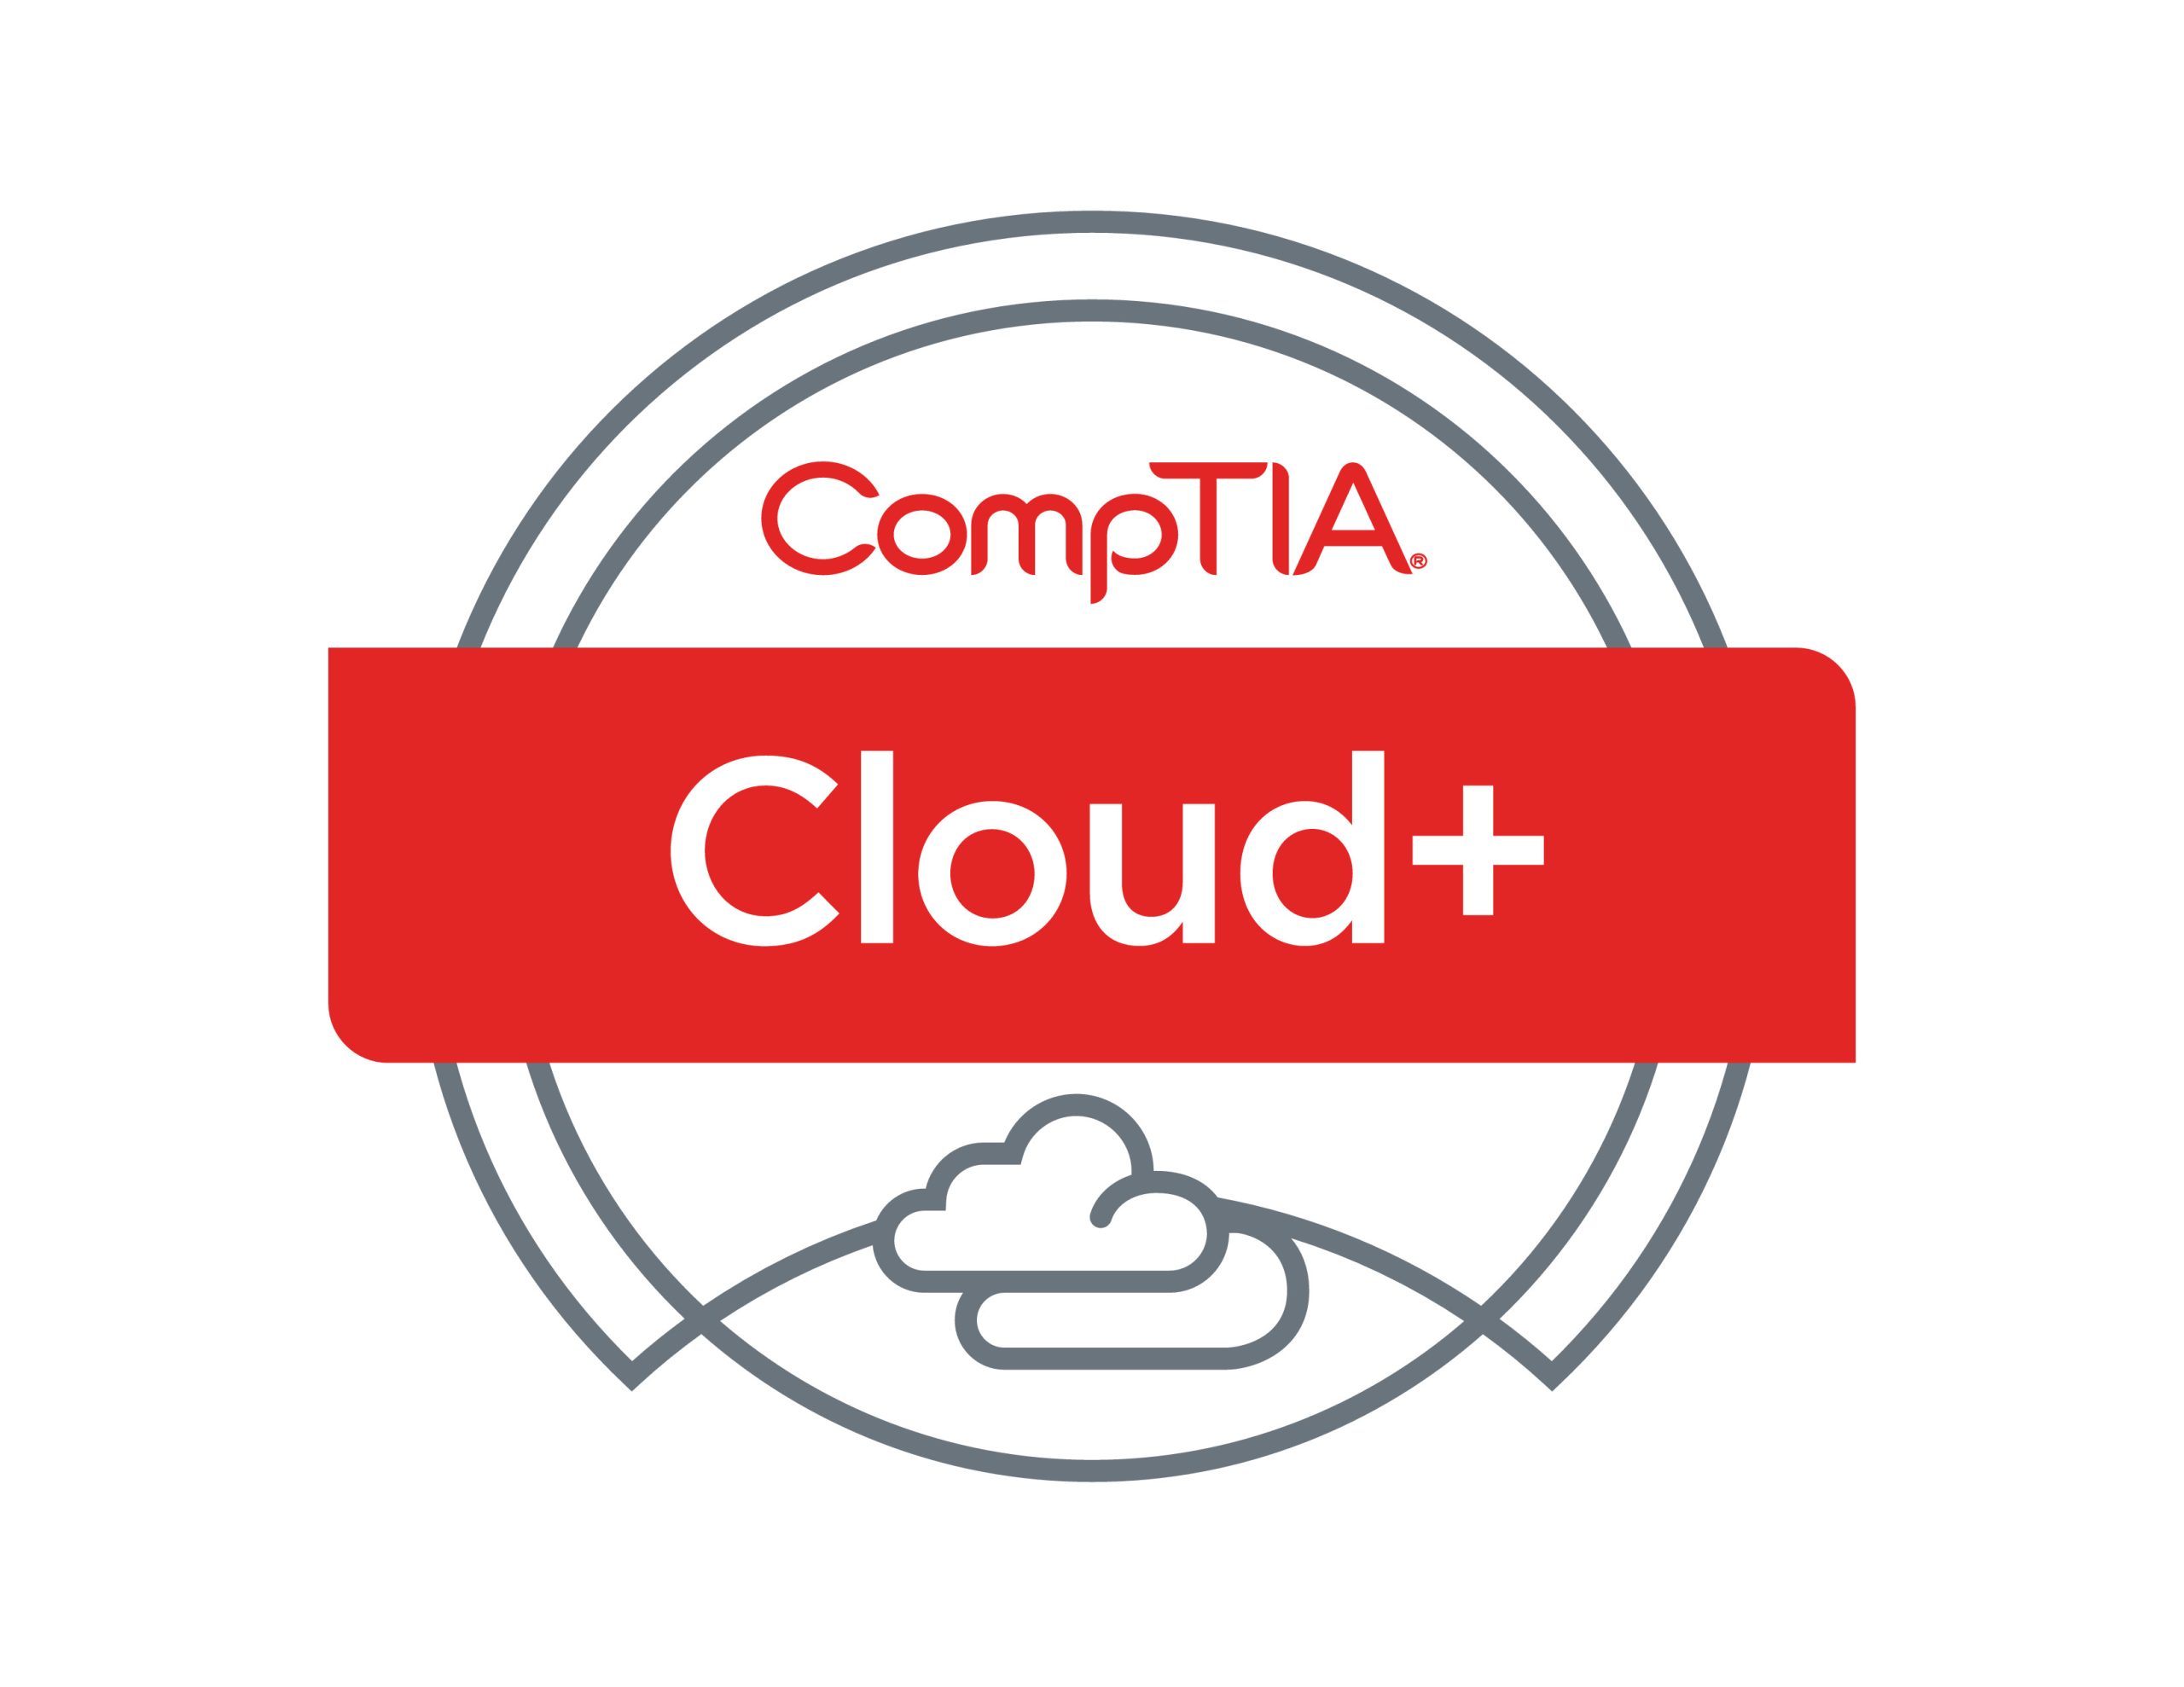 CompTIA cloud+